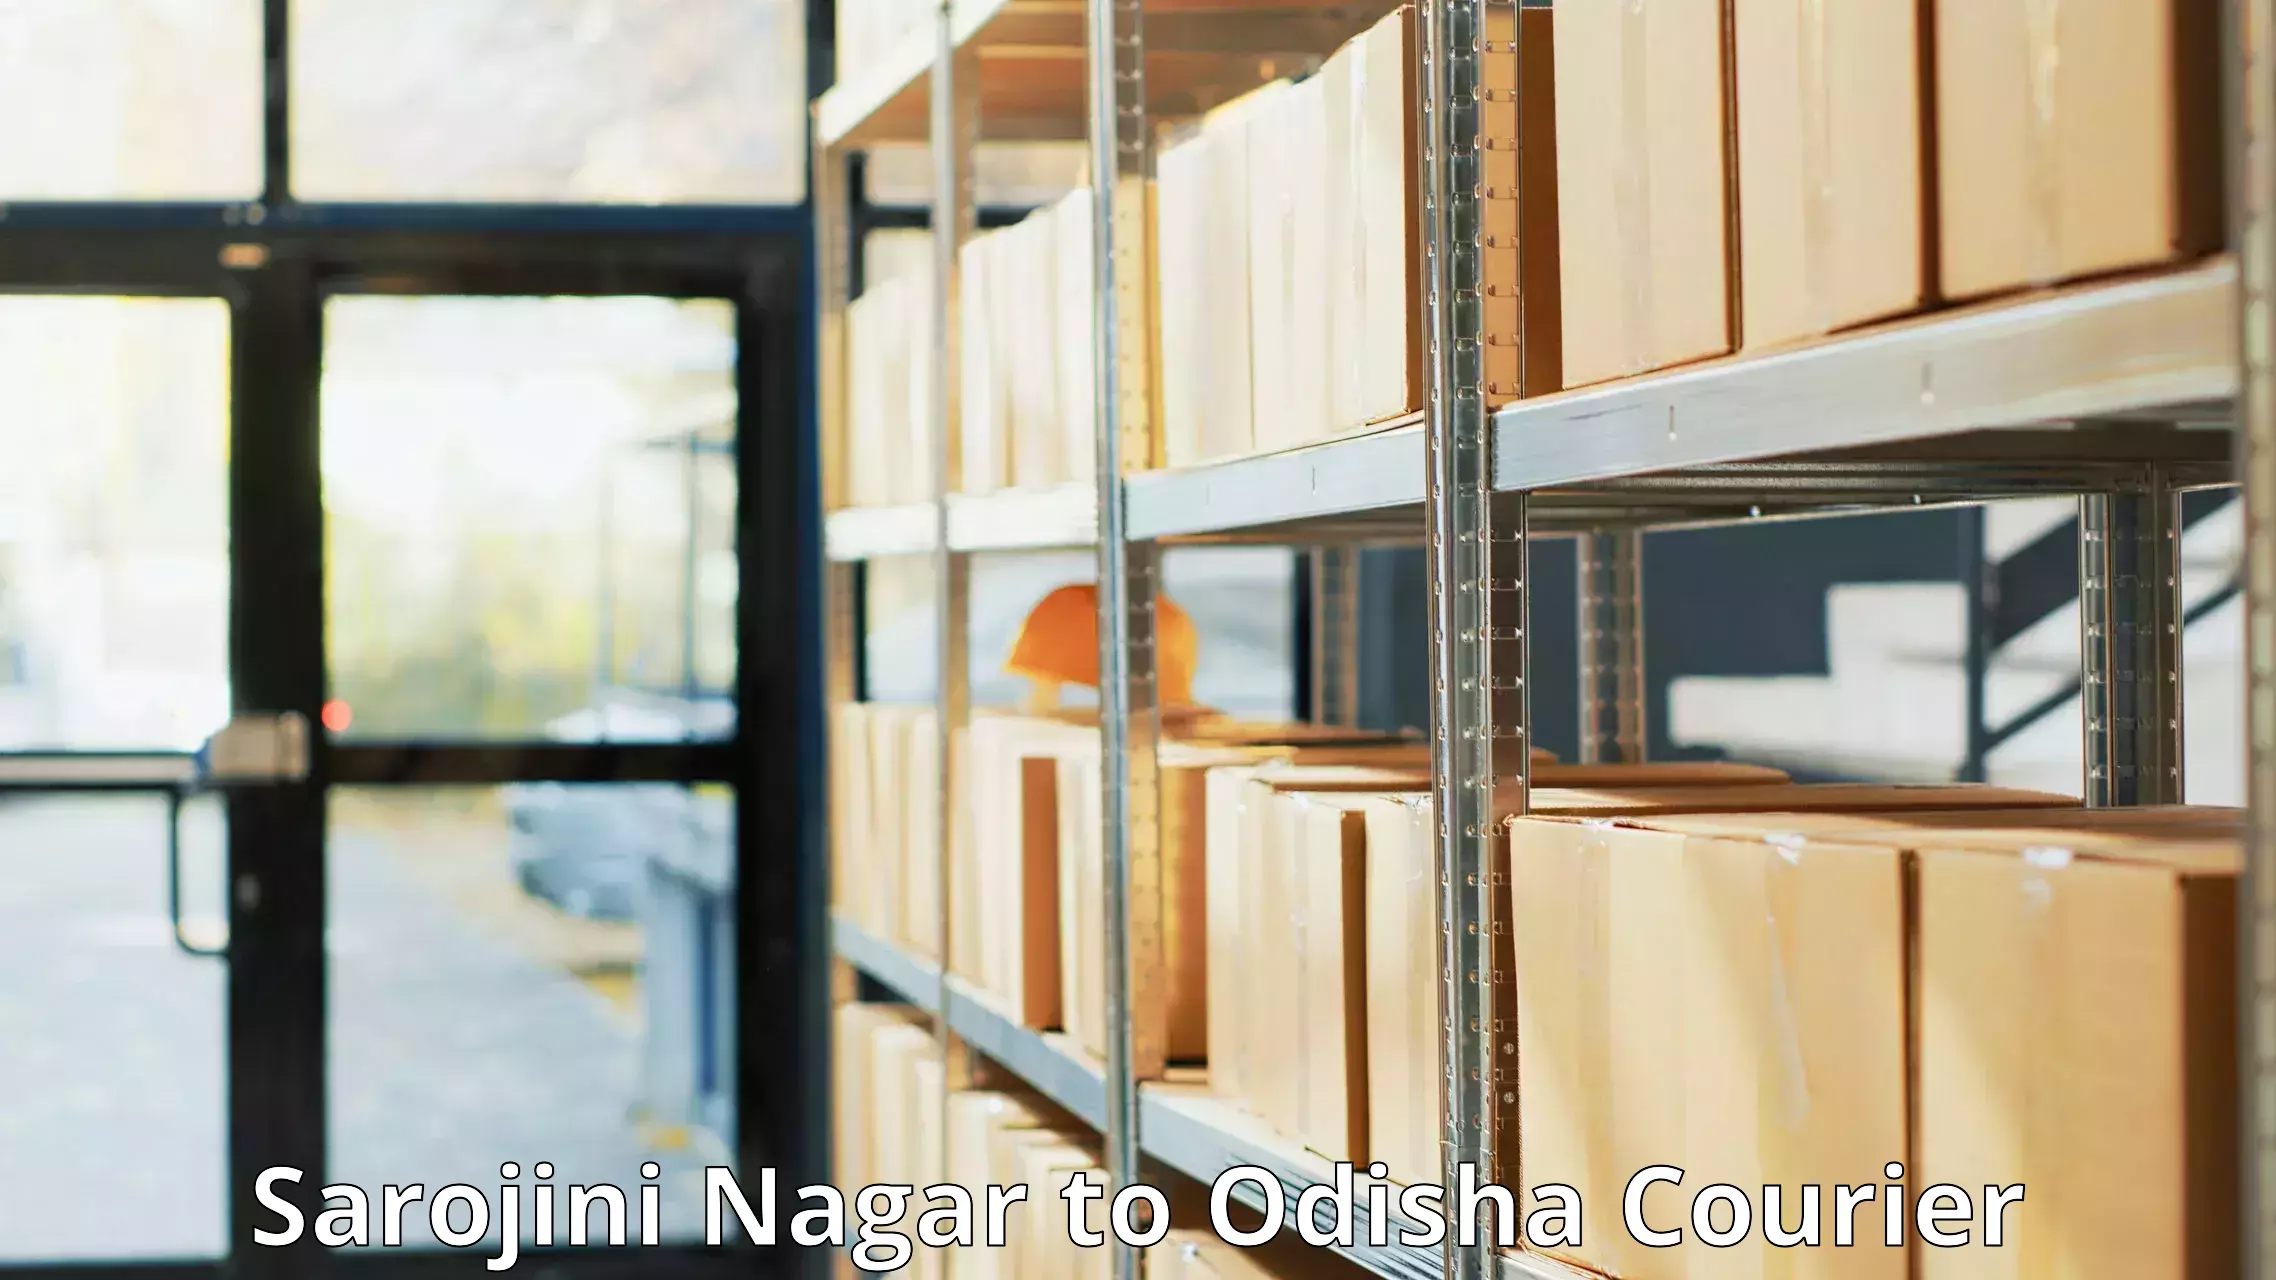 Courier service innovation in Sarojini Nagar to Koraput